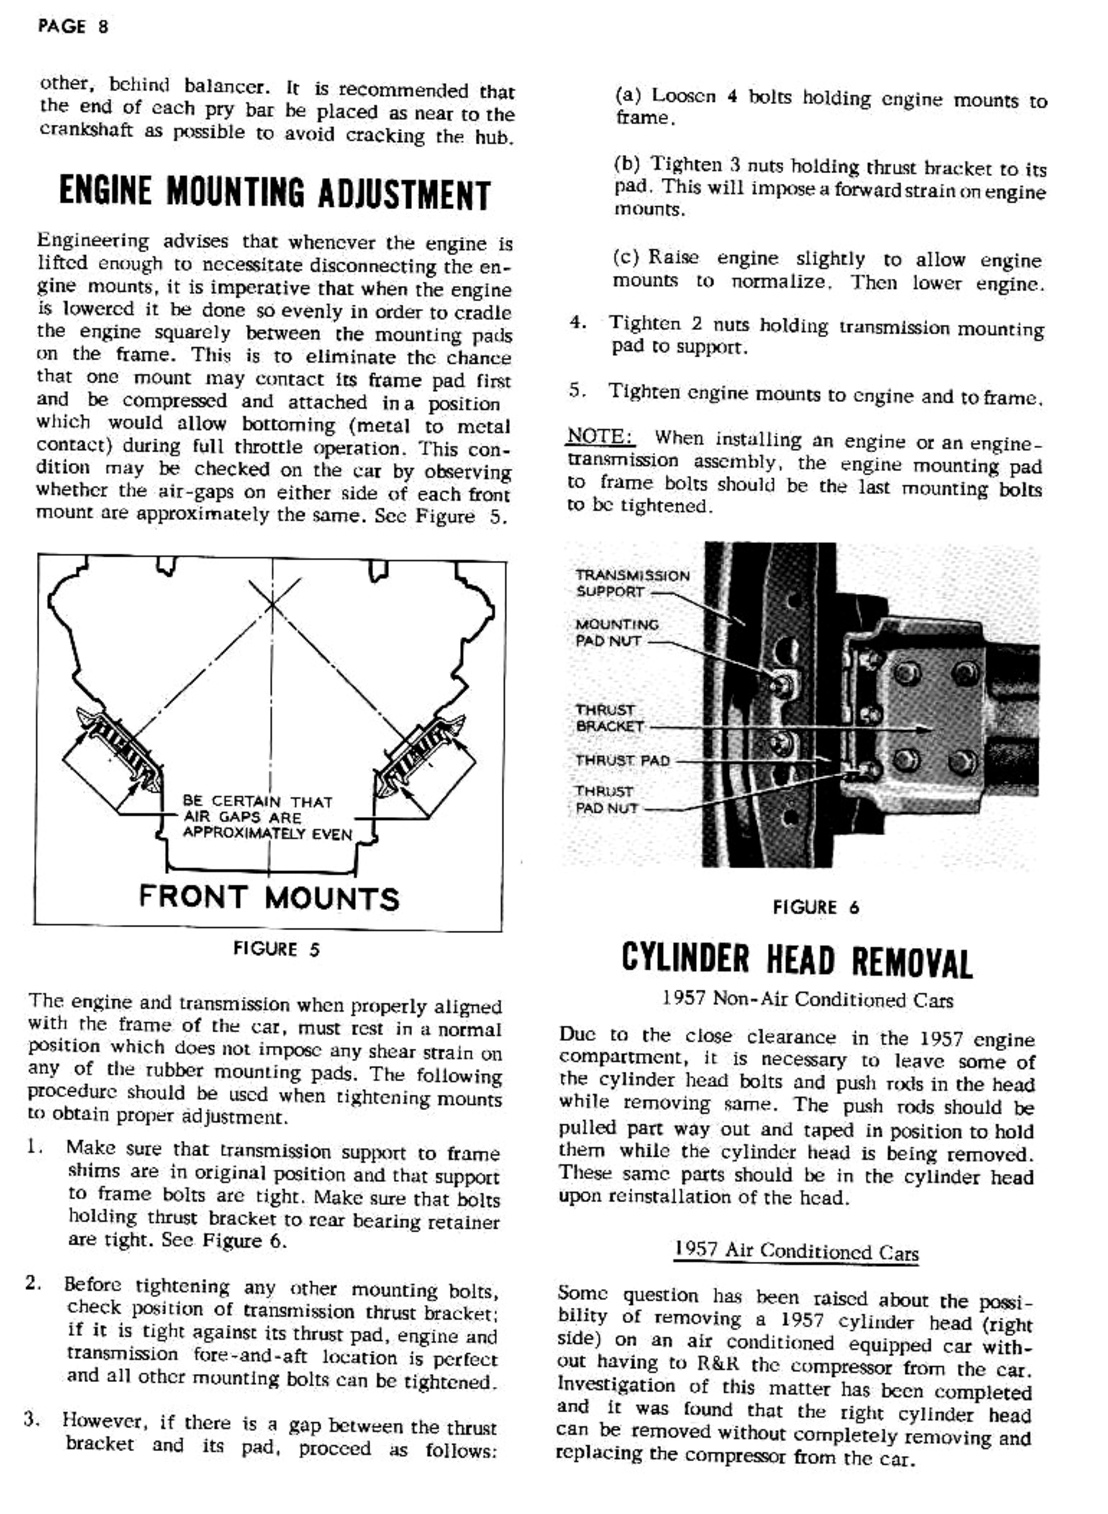 n_1957 Buick Product Service  Bulletins-015-015.jpg